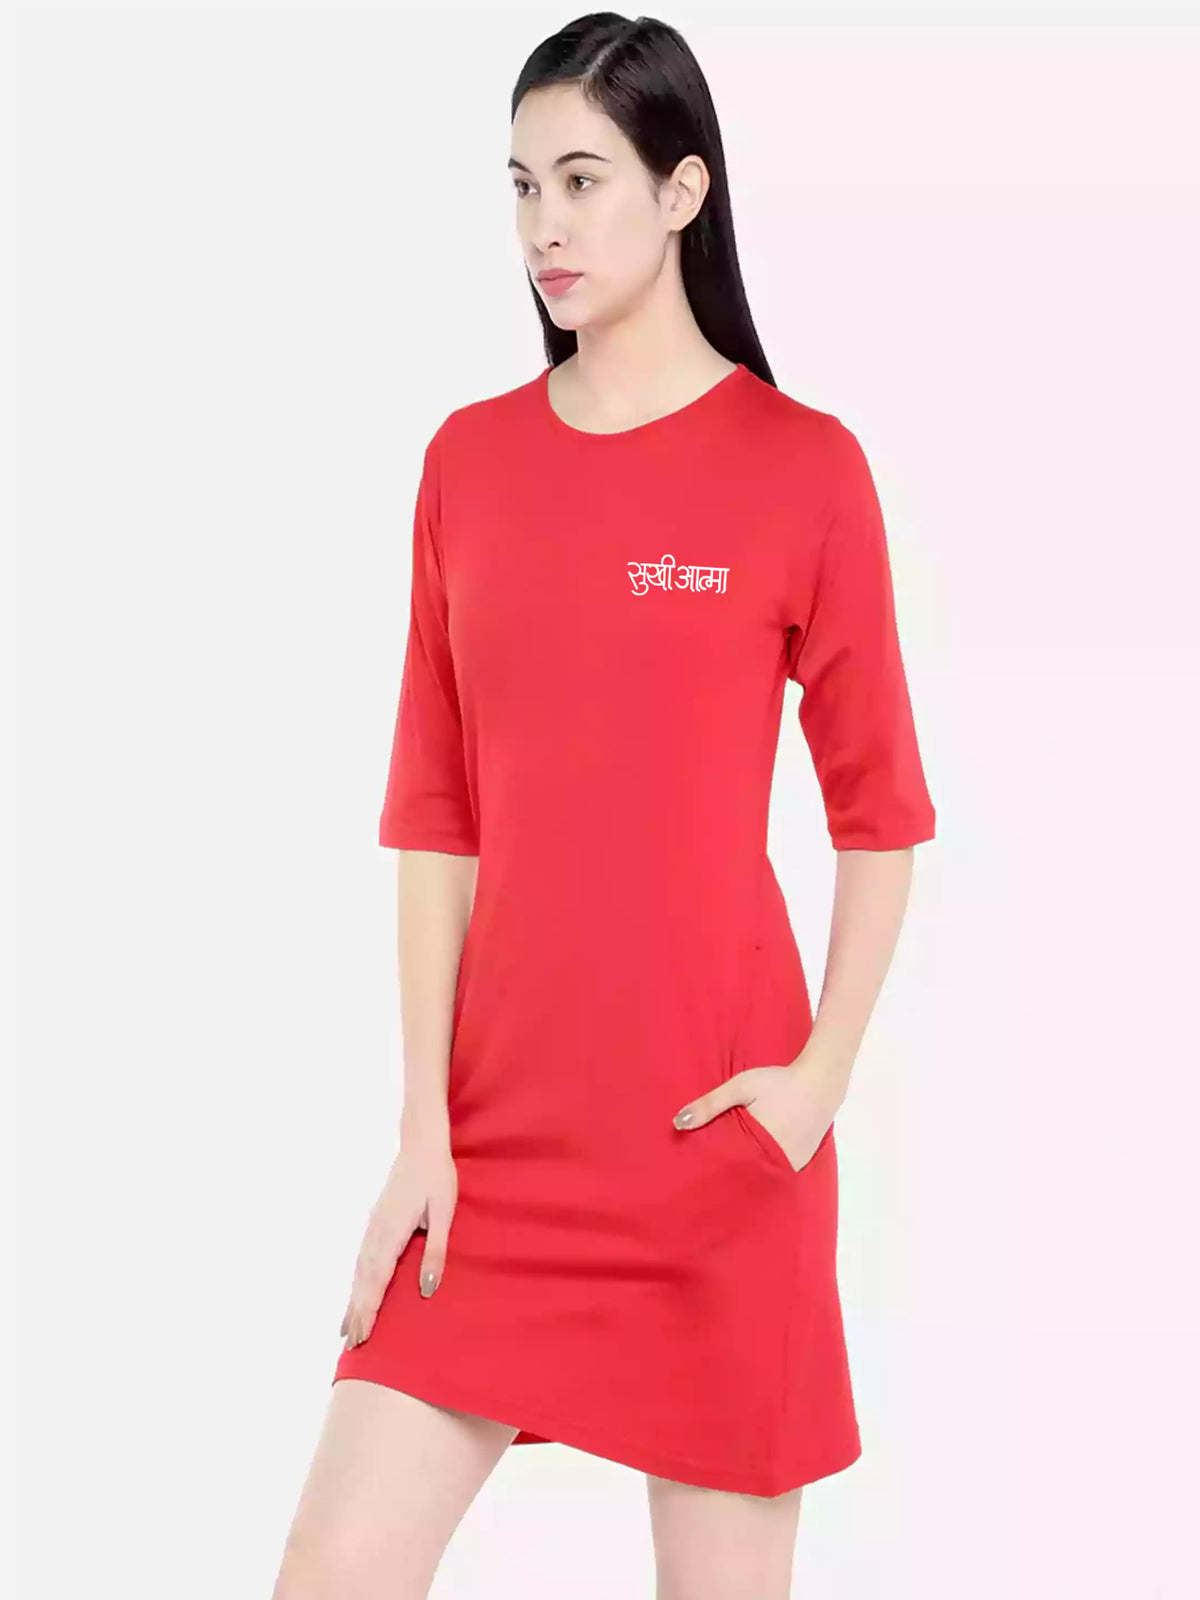 Sukhiaatma - Sukhiaatma Designer T-shirt Dress